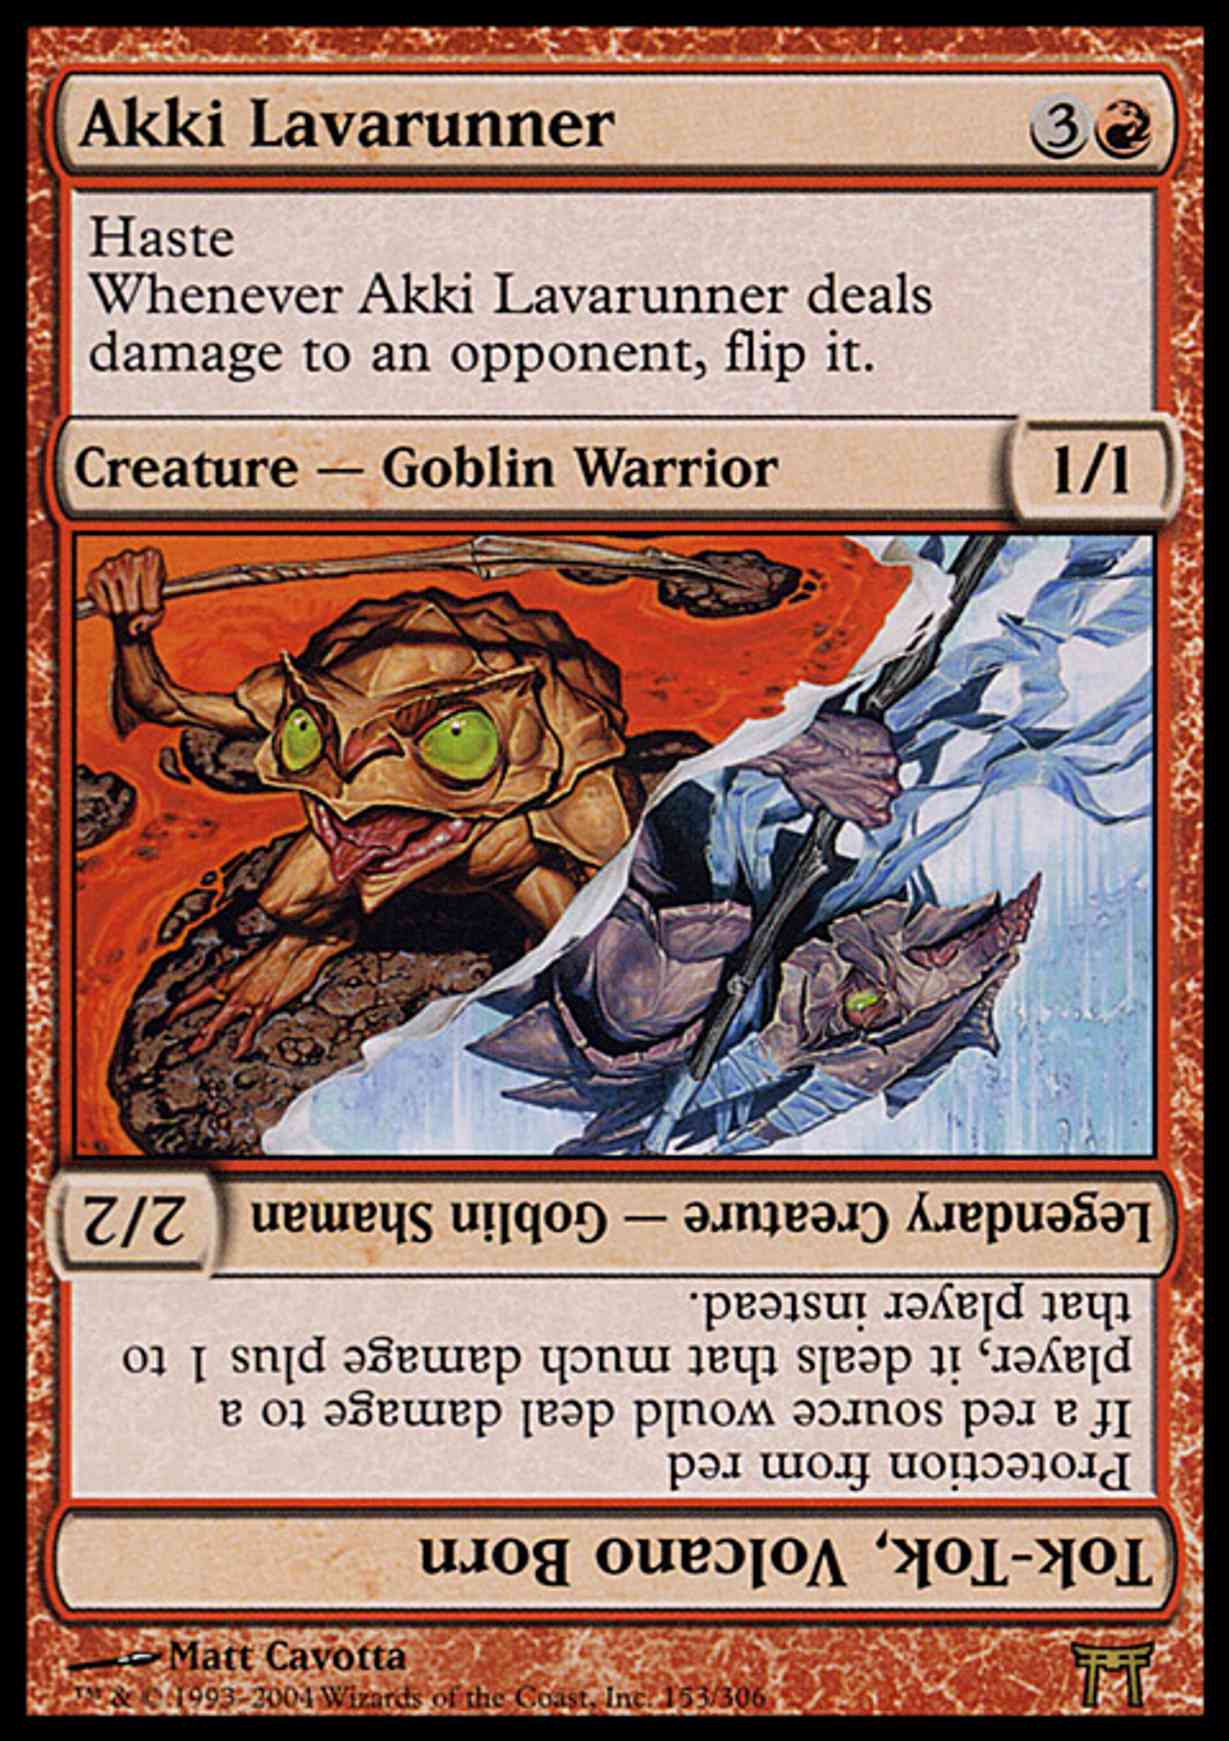 Akki Lavarunner magic card front